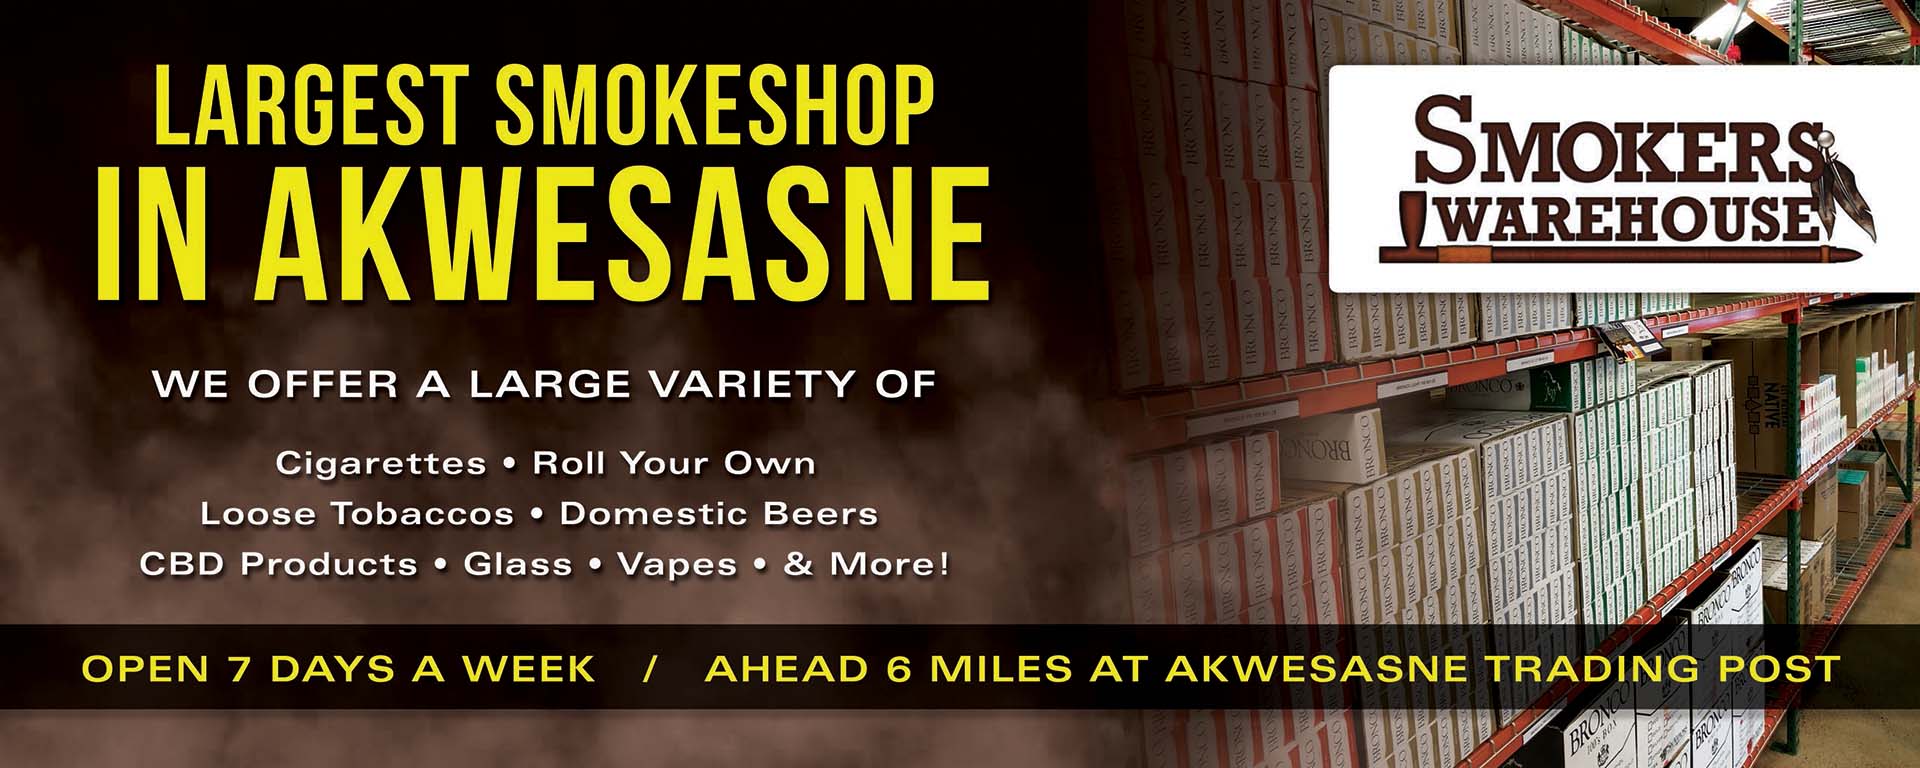 smokers warehouse banner